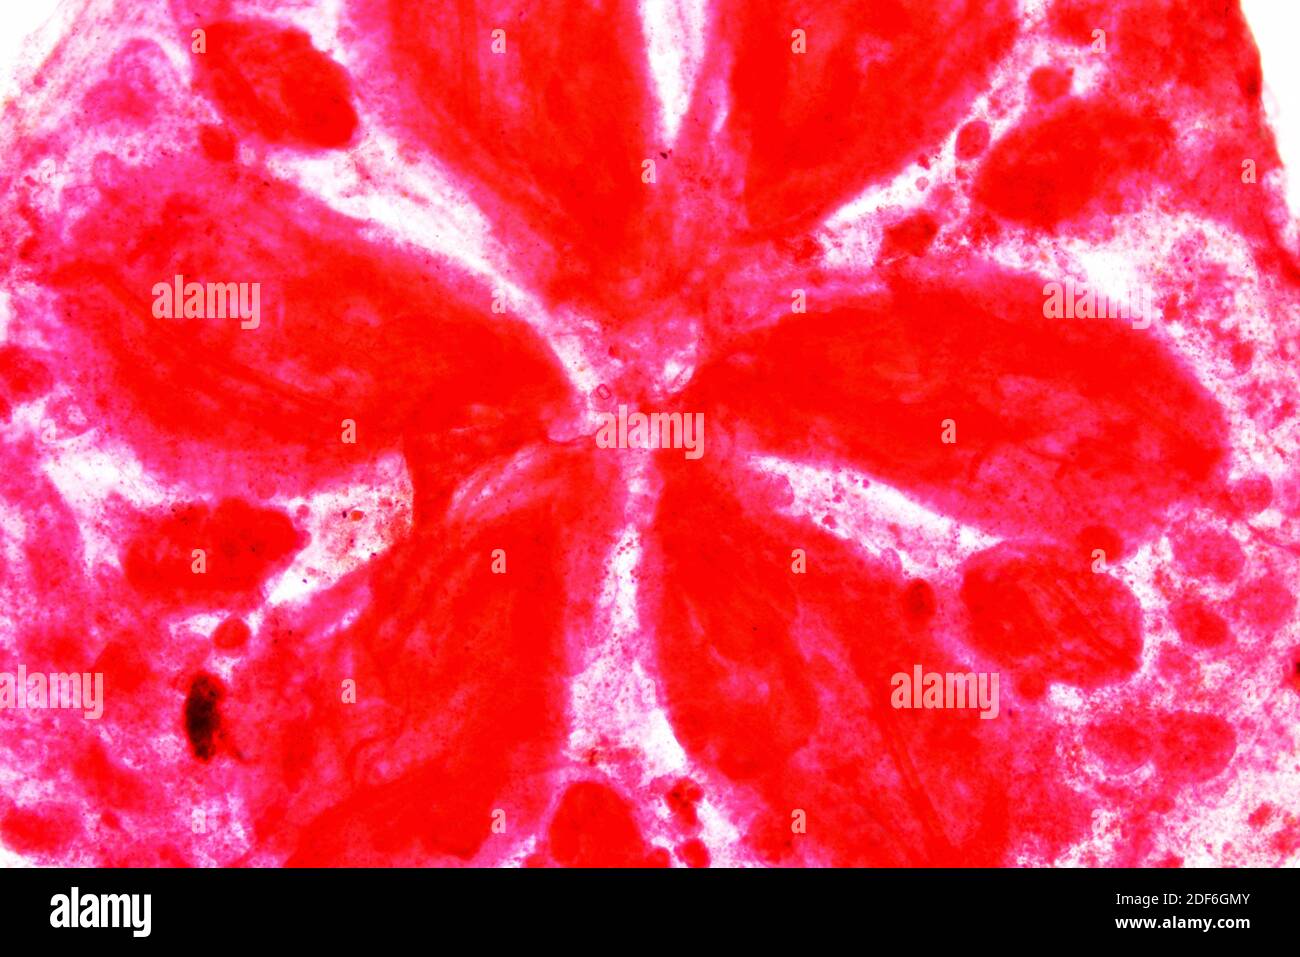 Ascidian estrella o tunicate estrella (Botryllus schlosseri), sección transversal. Microscopio óptico X40. Foto de stock